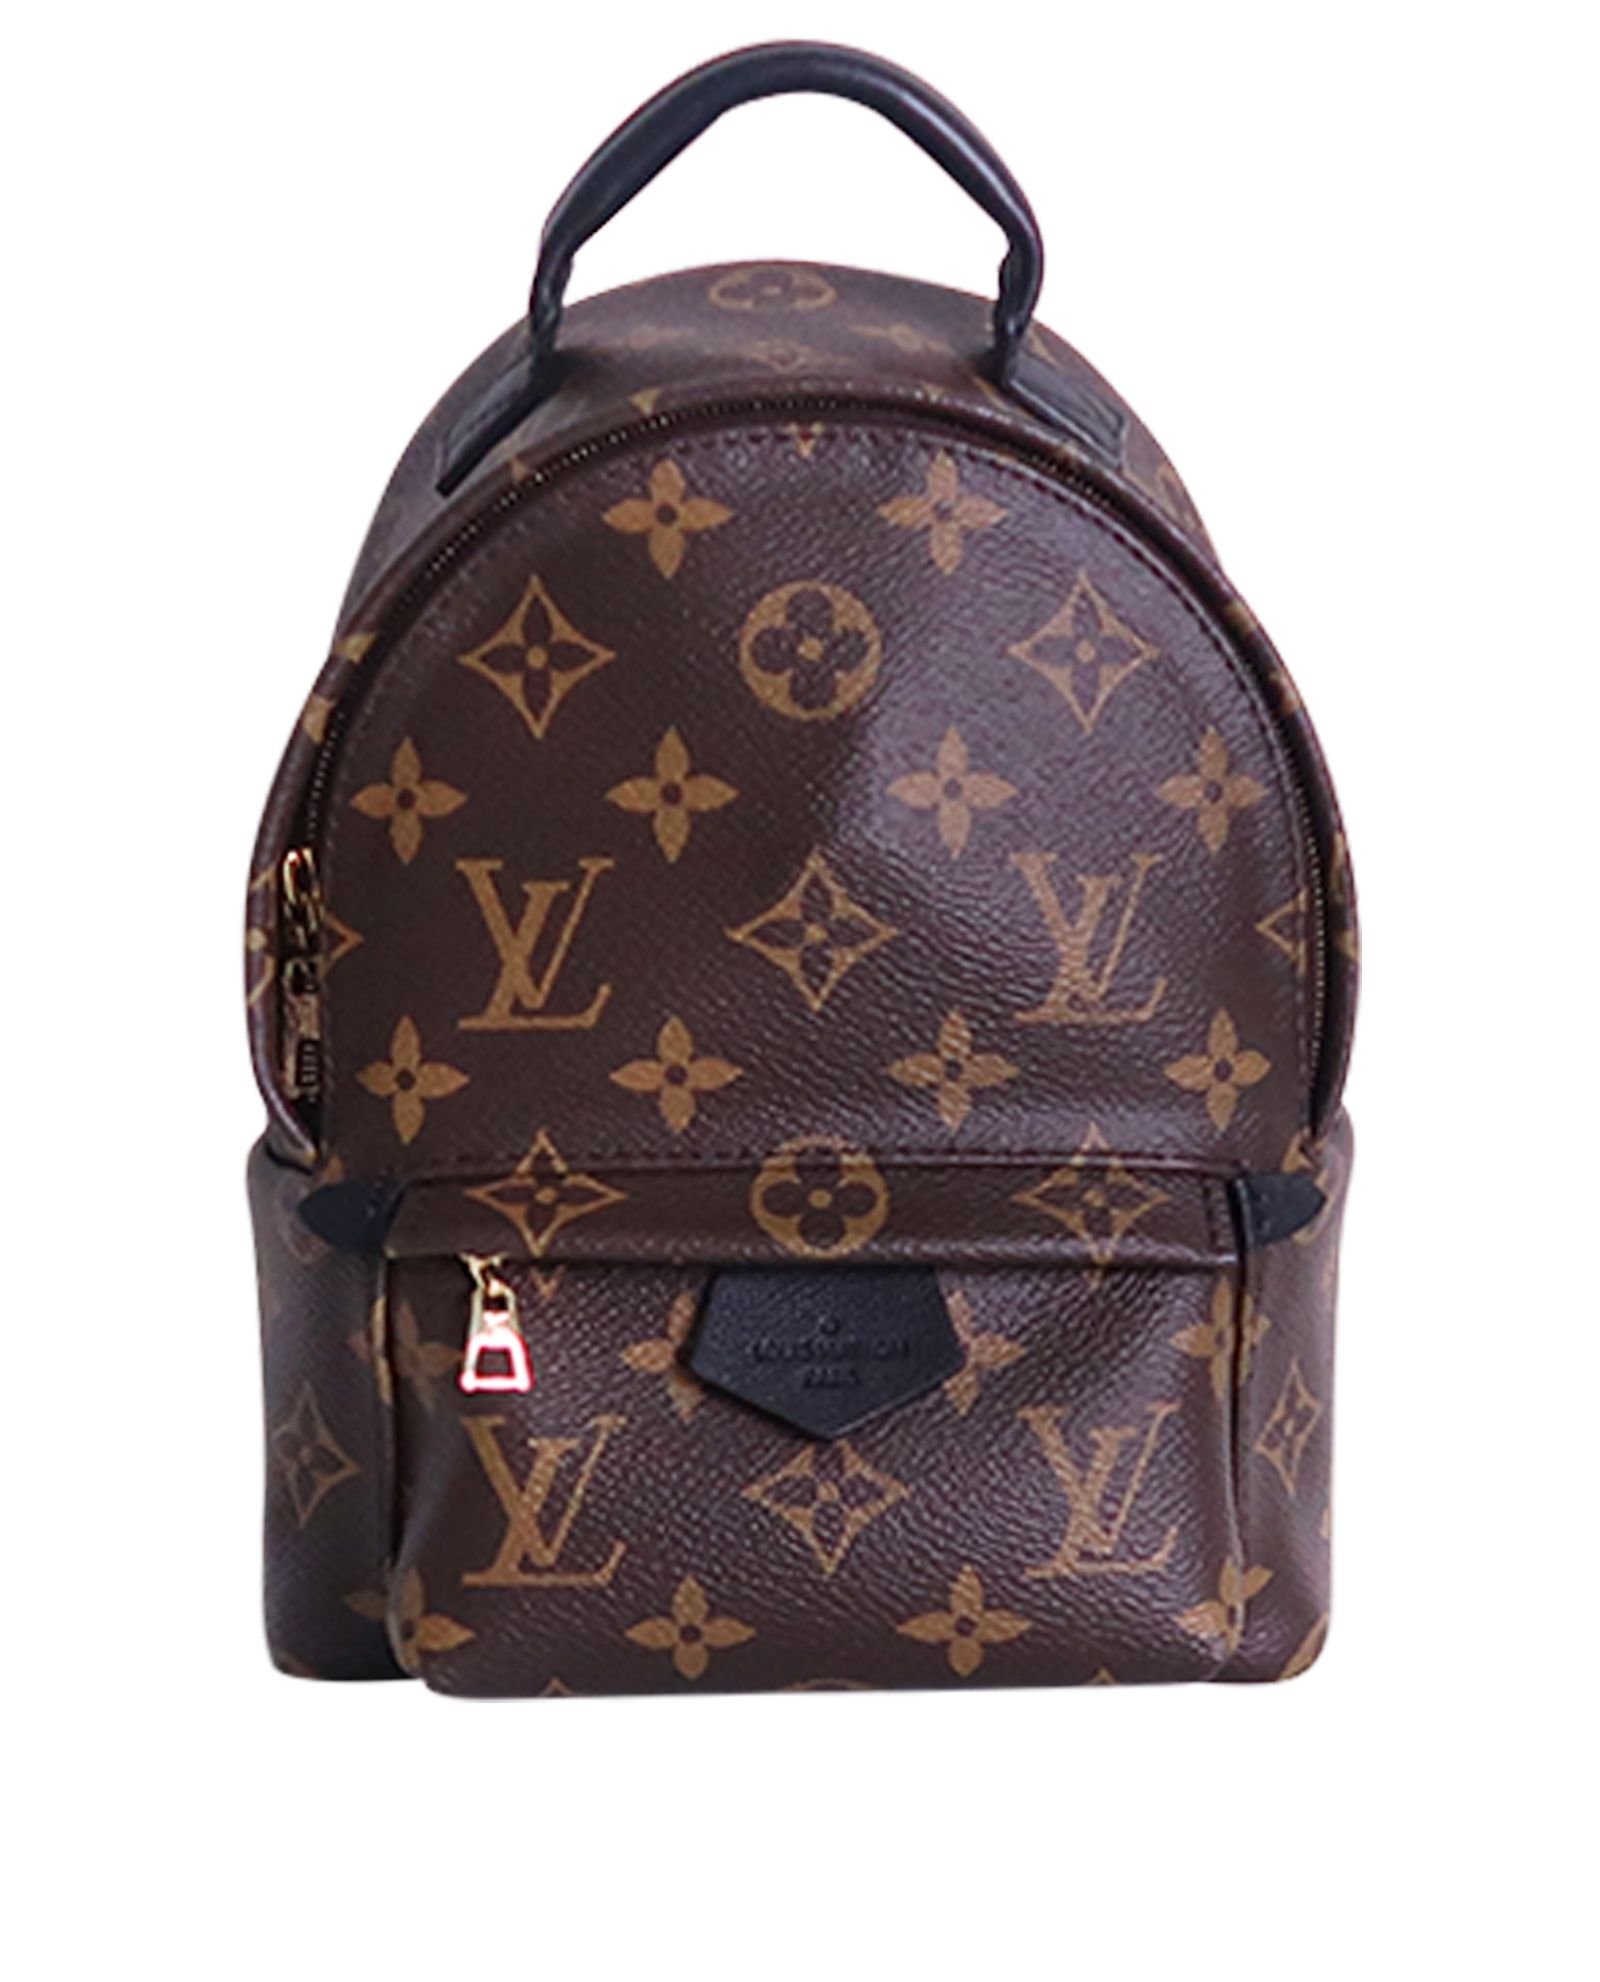 Palm Backpack Mini, Louis Vuitton - Designer Exchange | Buy